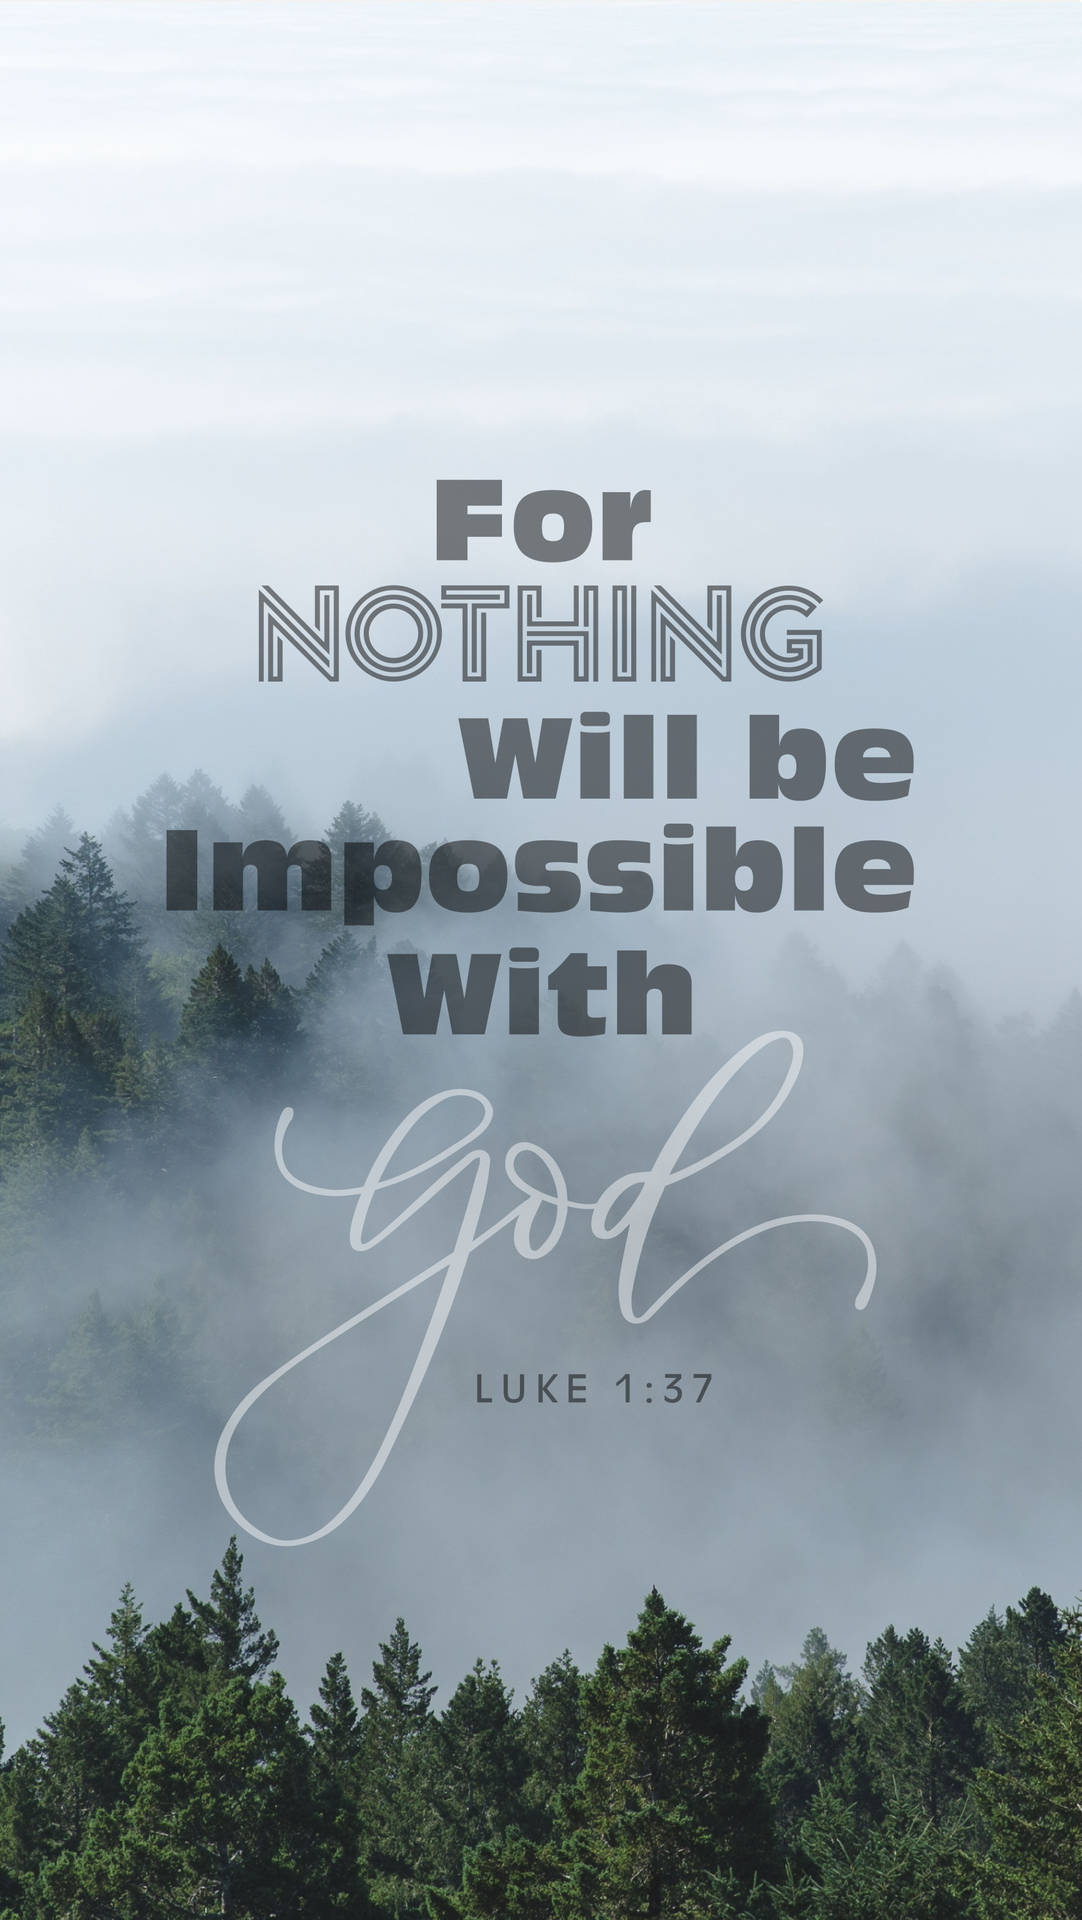 Luke 1:37 Bible Quote Wallpaper